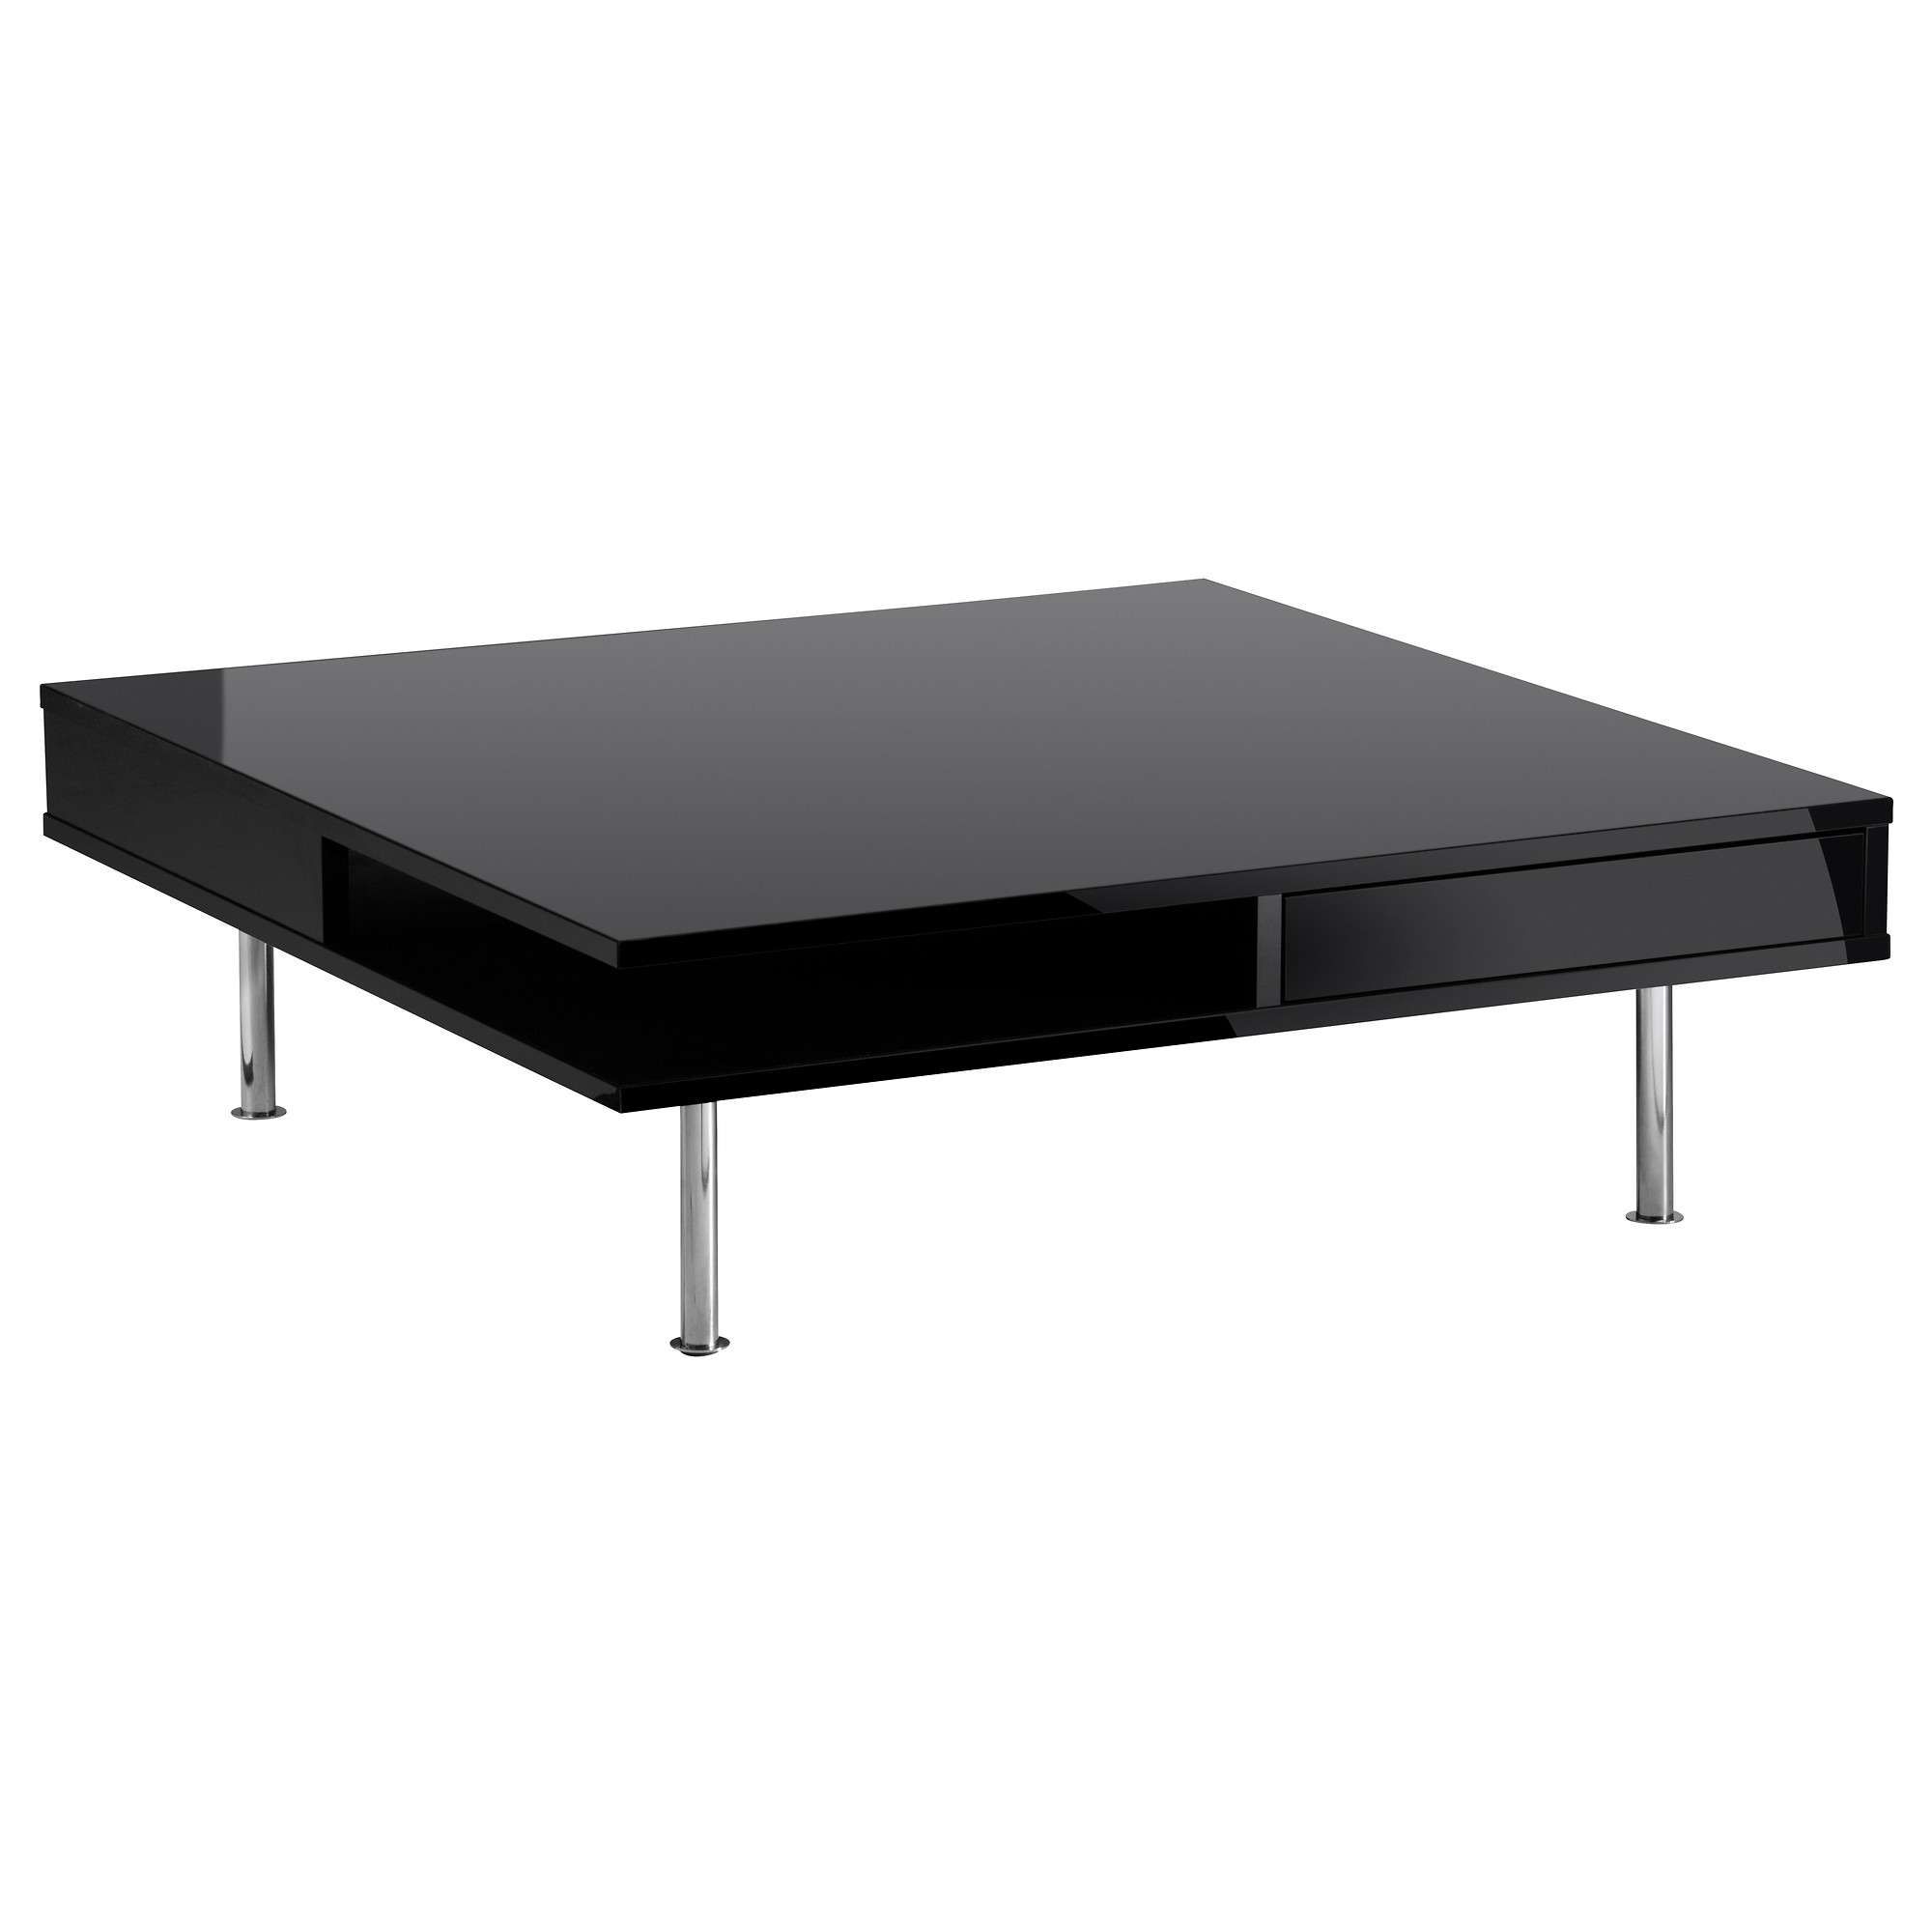 Tofteryd Coffee Table – High Gloss White – Ikea With Popular High Gloss Coffee Tables (View 10 of 20)